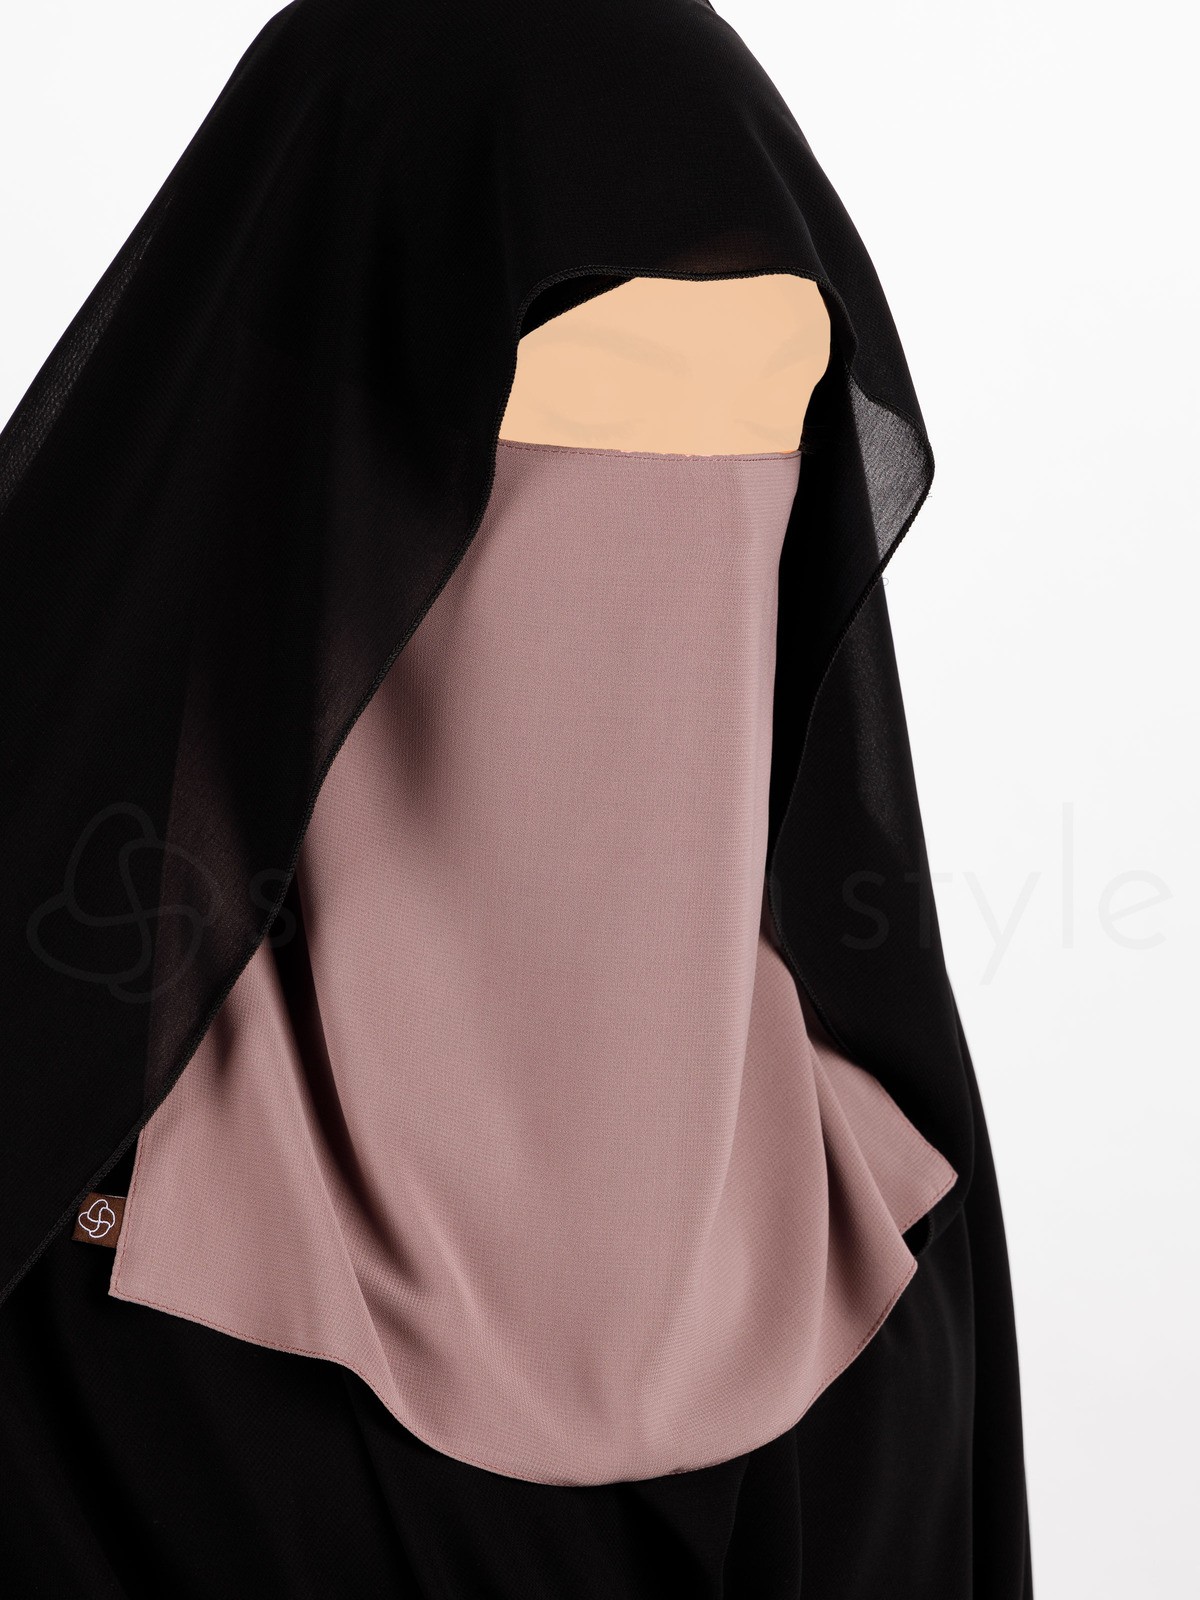 Sunnah Style - Elastic Half Niqab (Twilight Mauve)